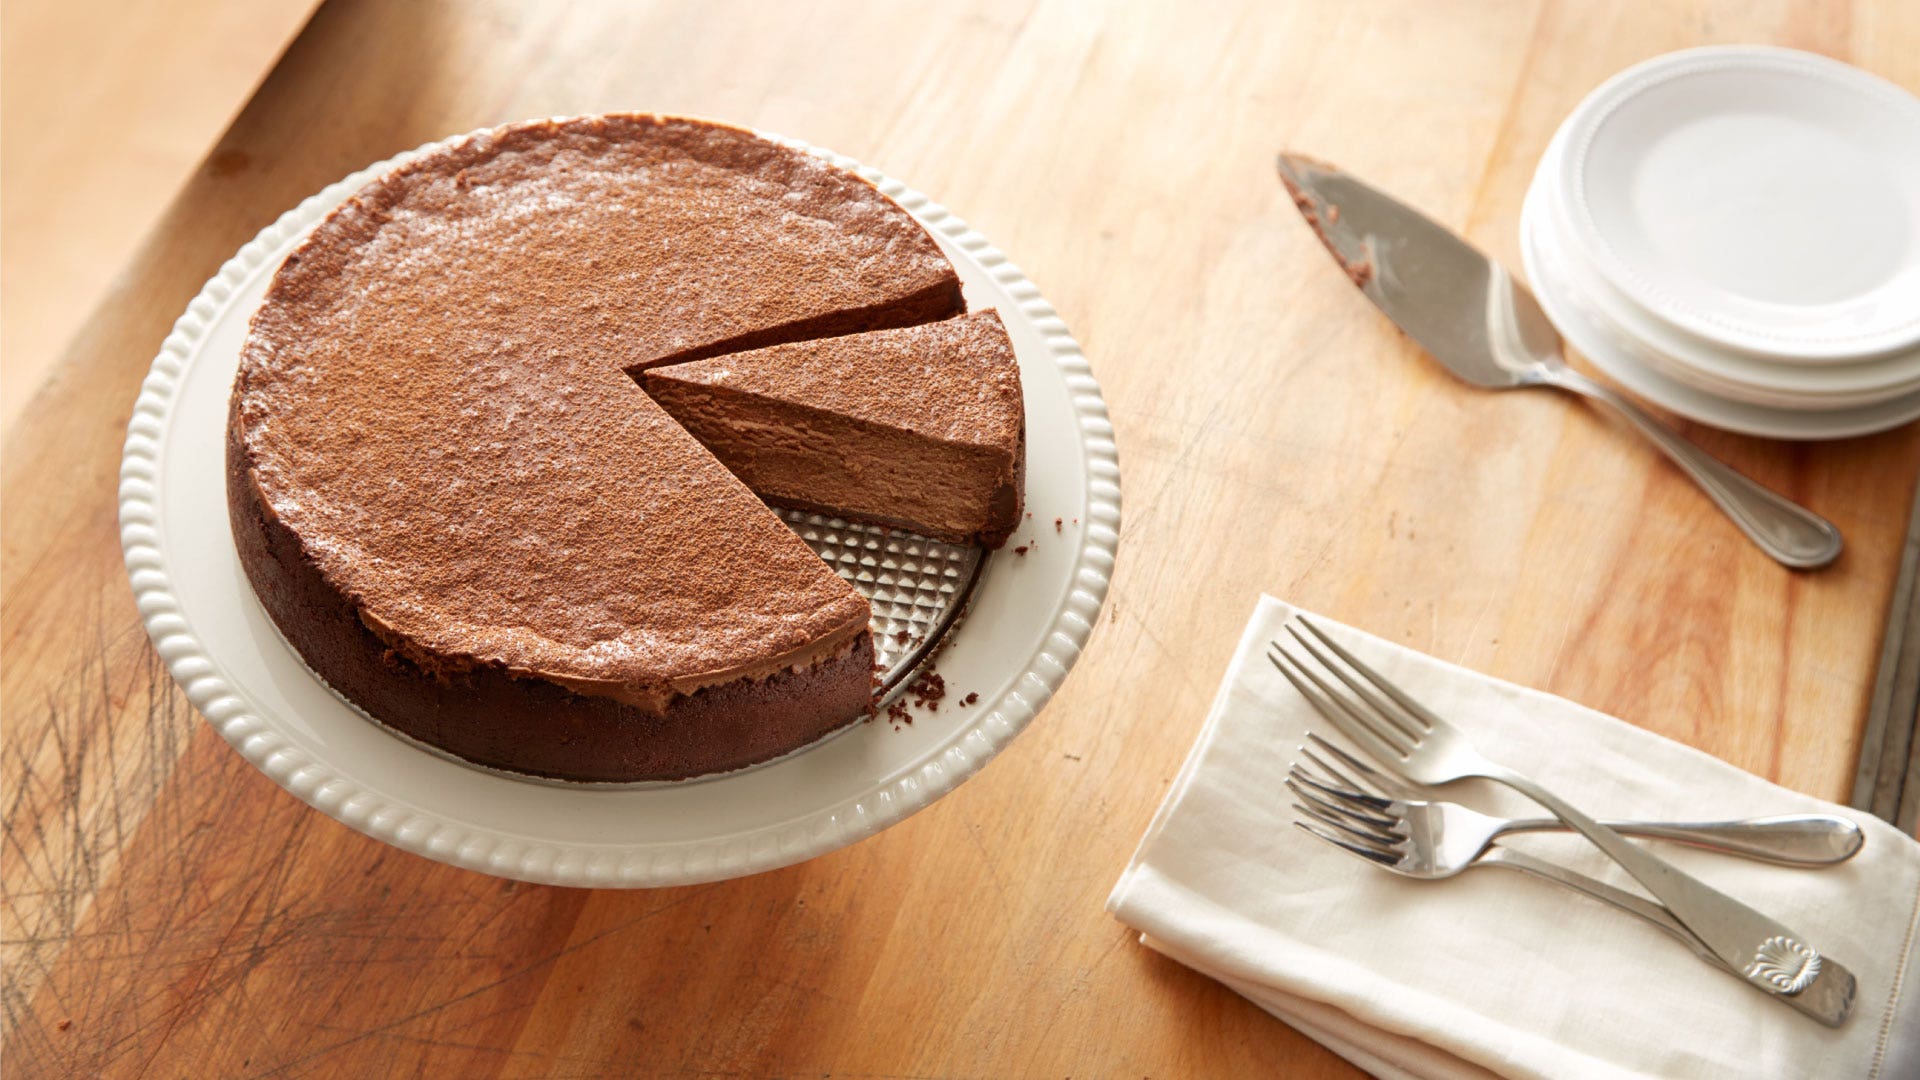 35 Best Cheesecake Recipes for a Creamy, Dreamy Dessert